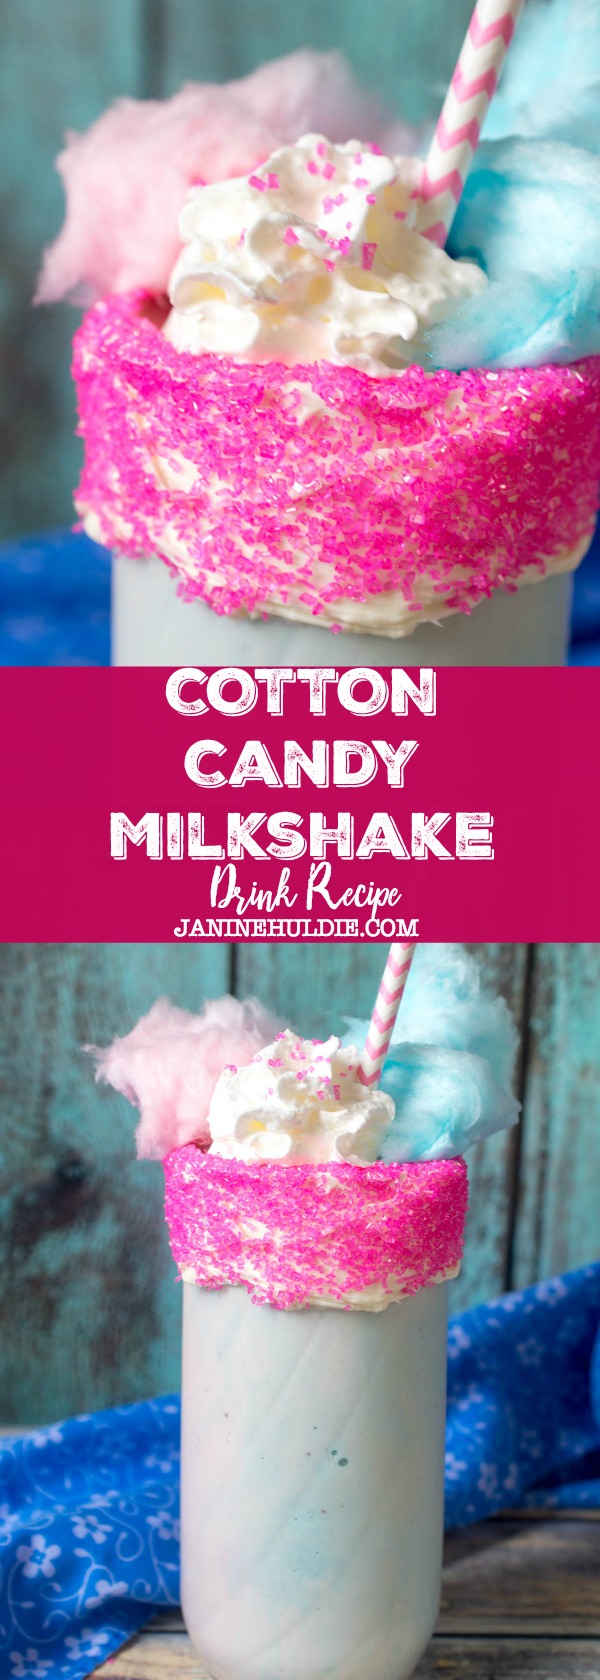 Cotton Candy Milkshake Recipe